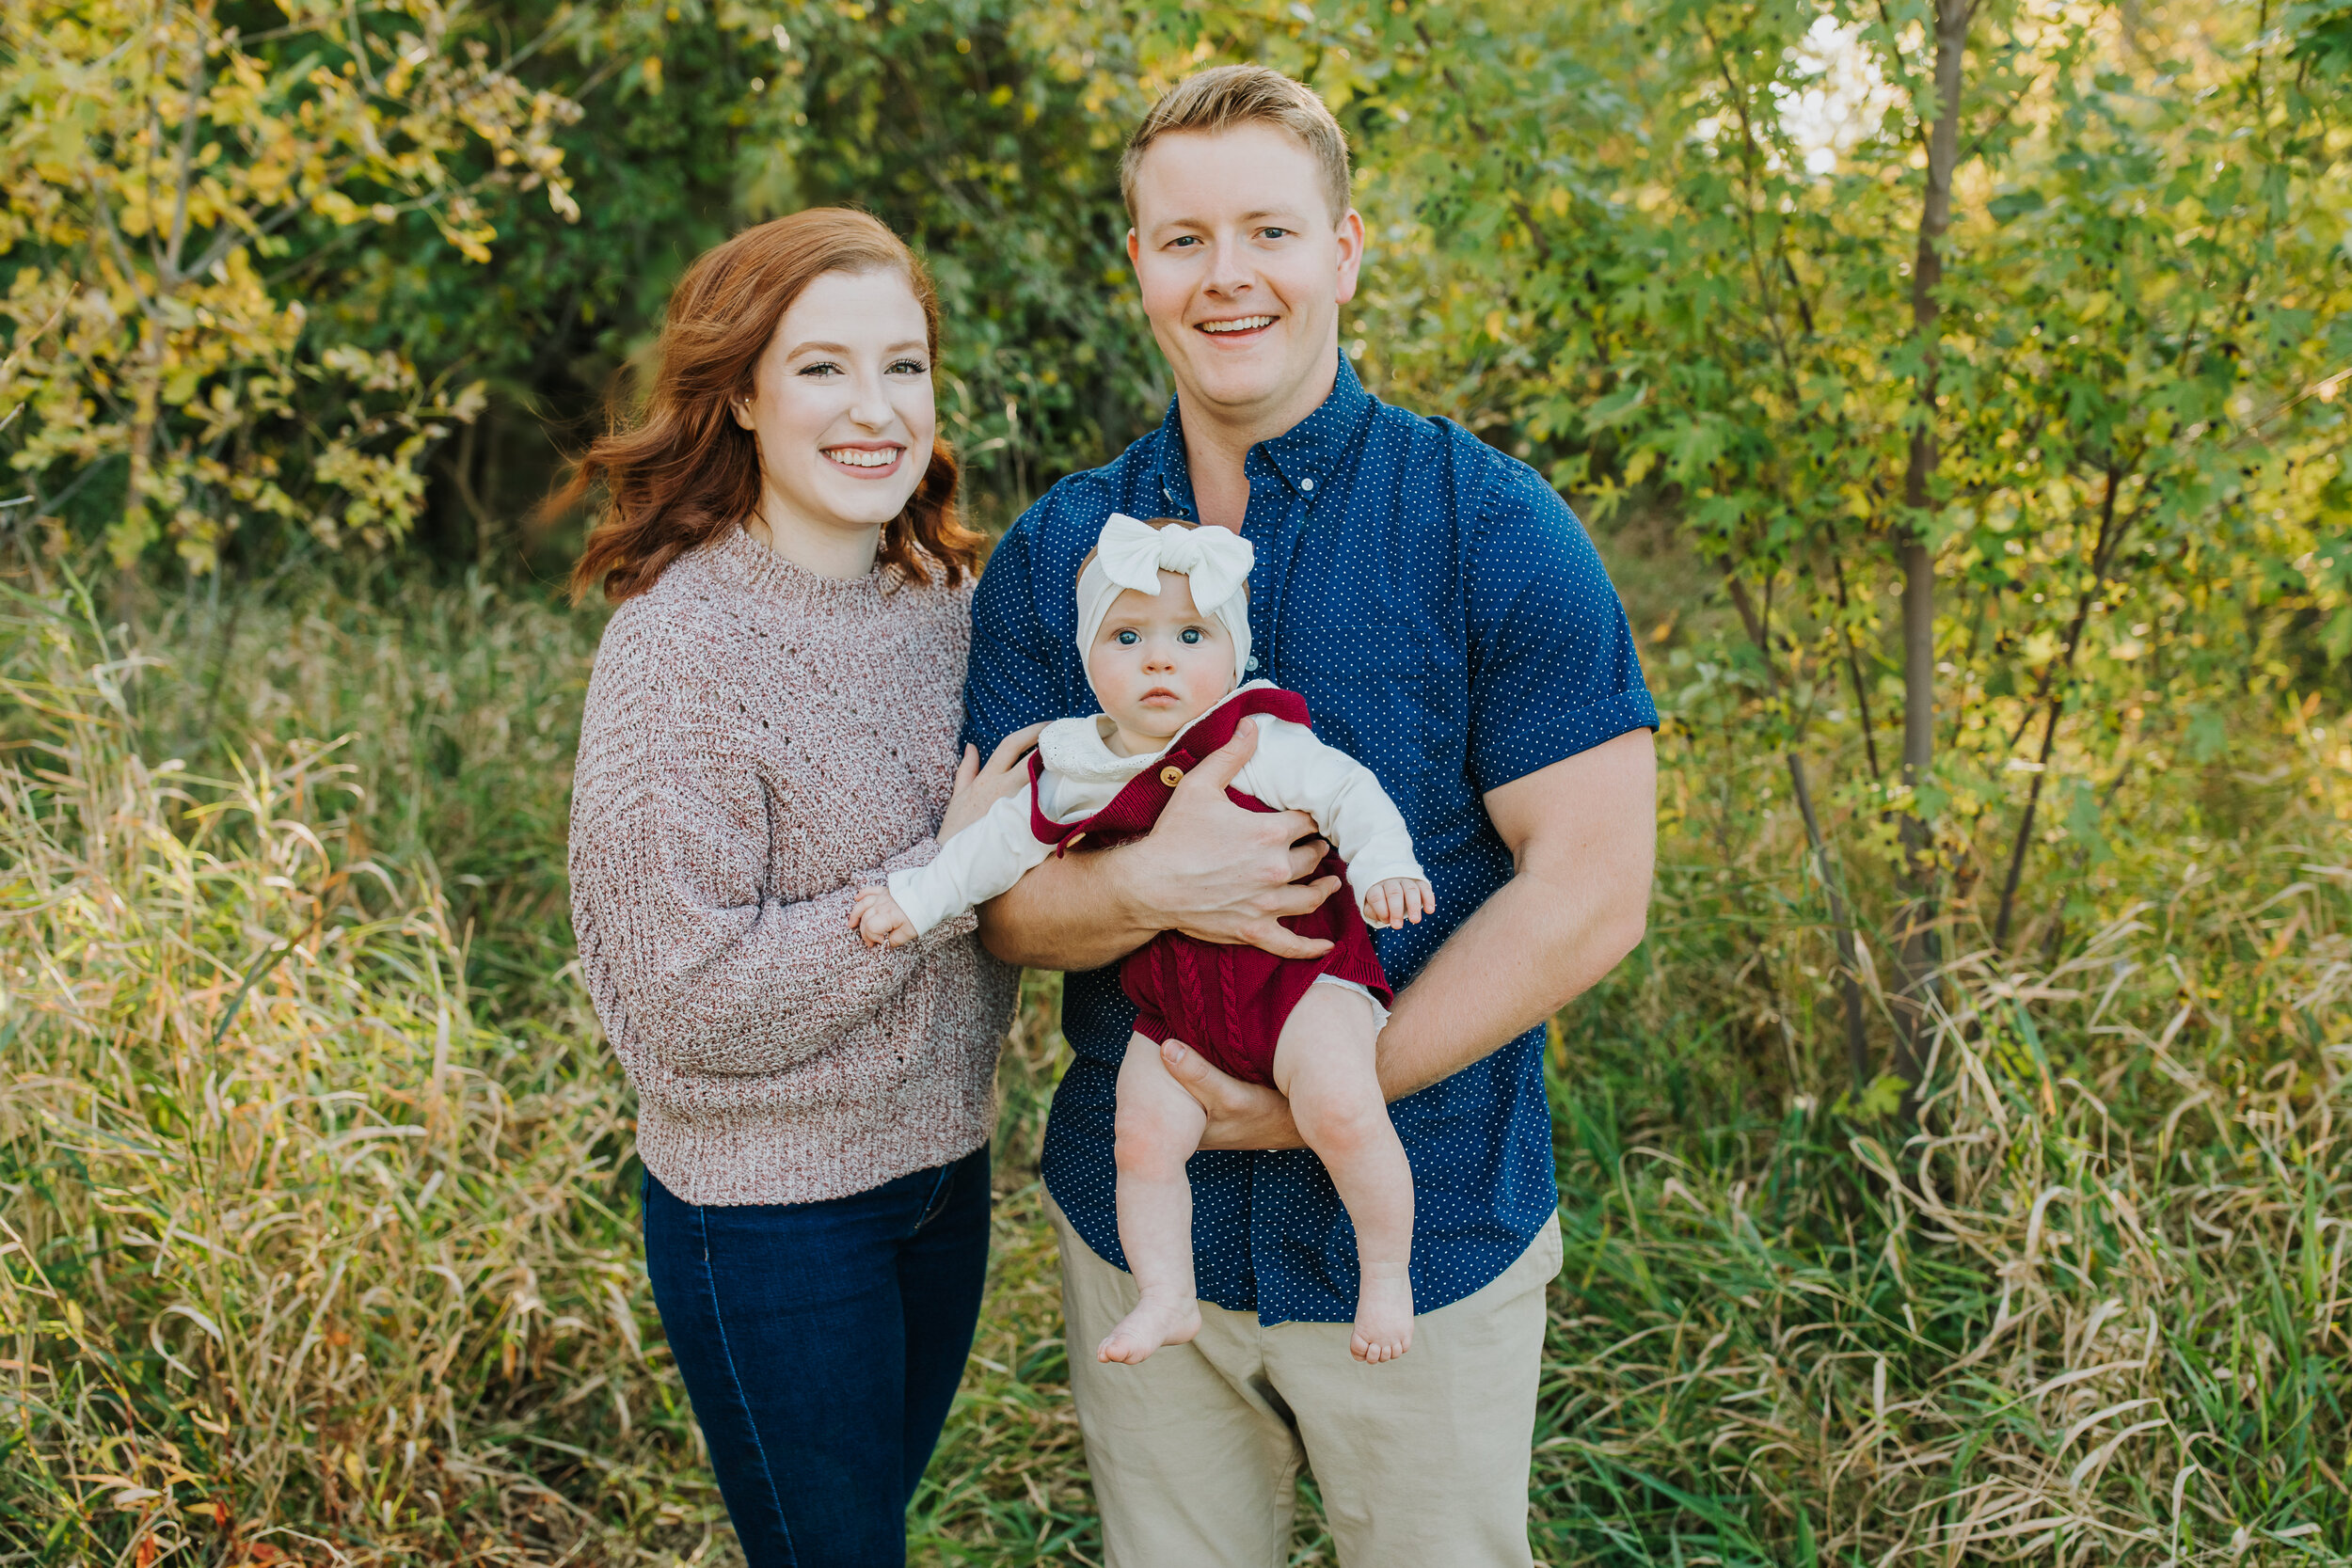 Unger Family Photos 2020 - Nathaniel Jensen Photography - Omaha Nebraska Family Photographer-4.jpg